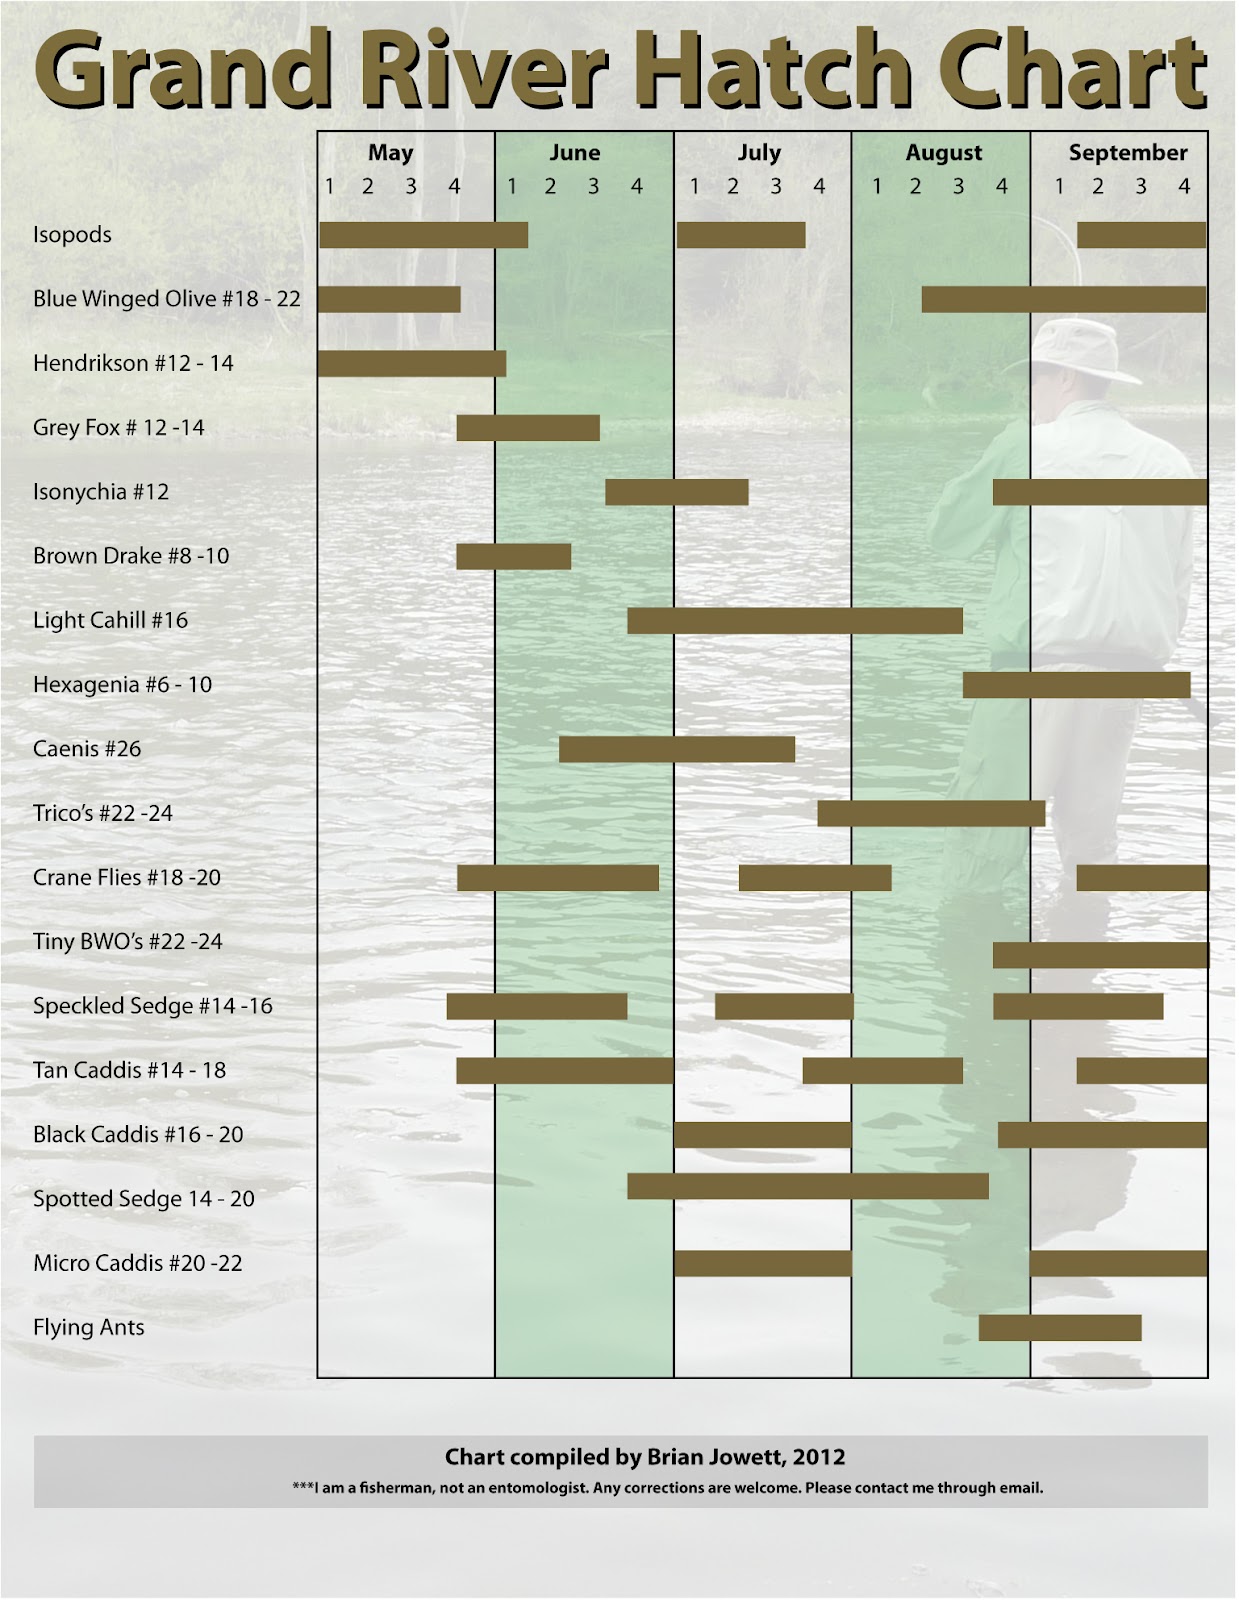 The Elliot Lake Flyfishing Blog.: Grand River Hatch Chart.